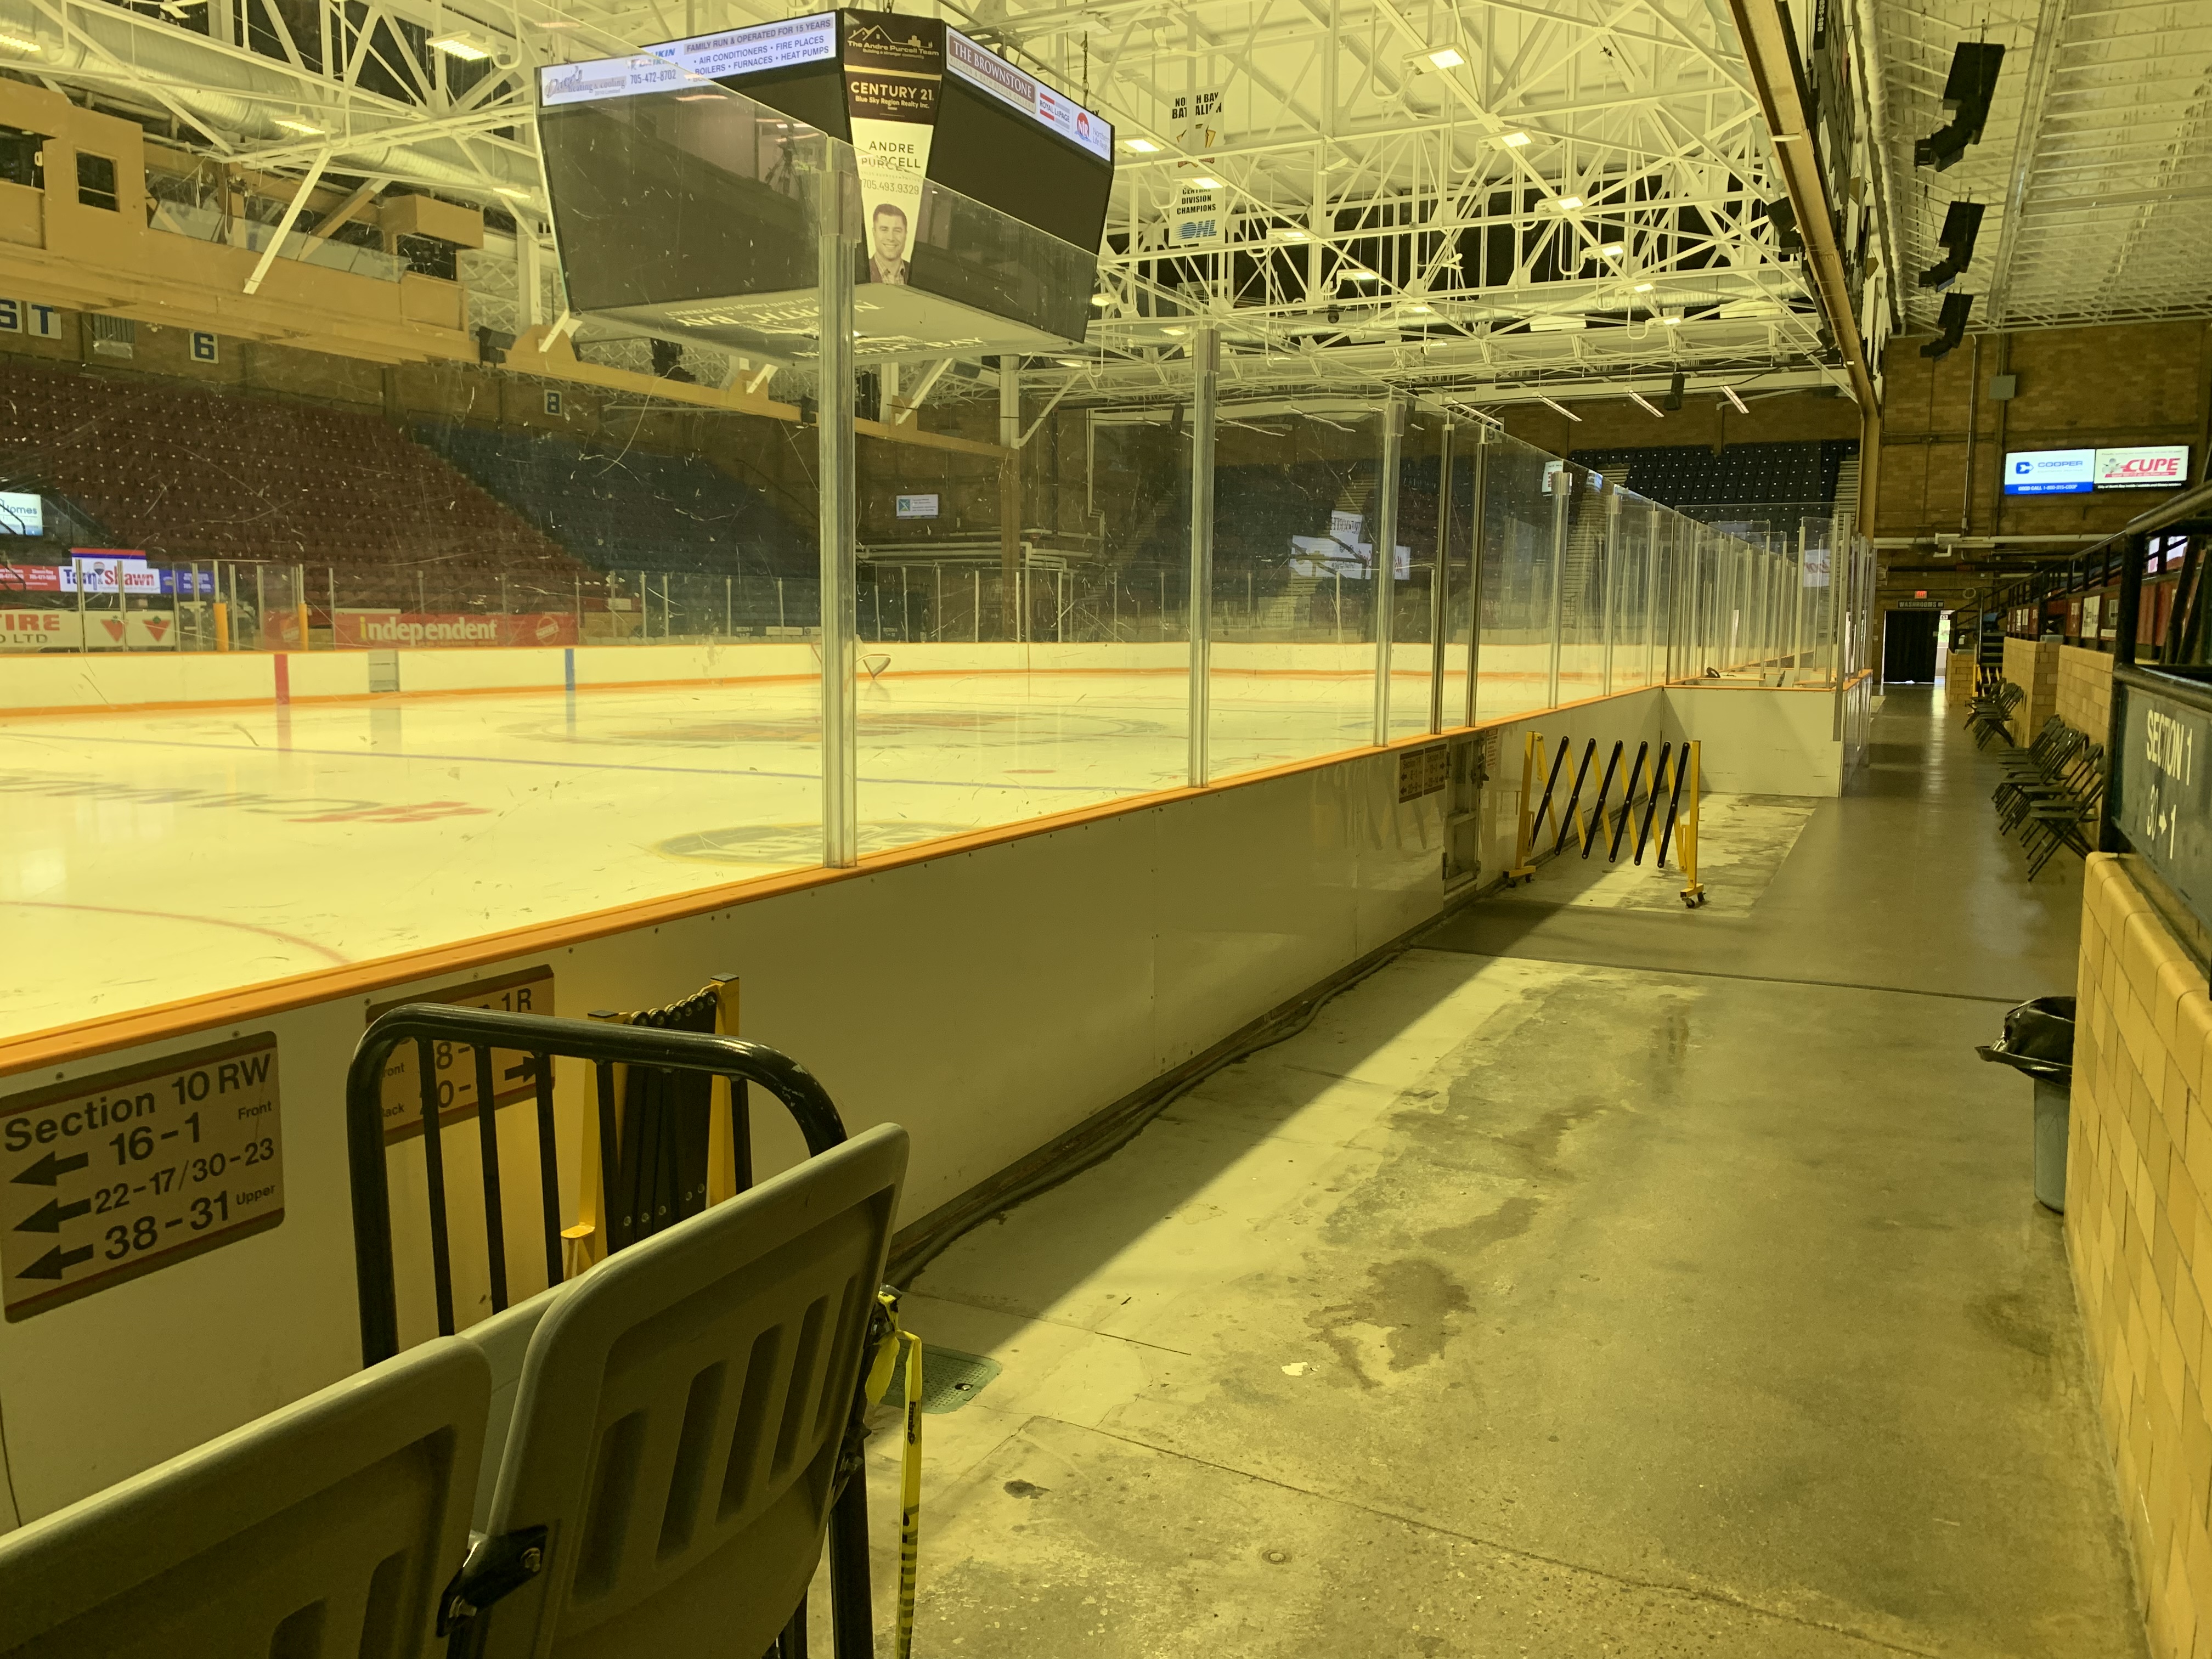 North Bay's main arena undergoing renovation - Northern Ontario